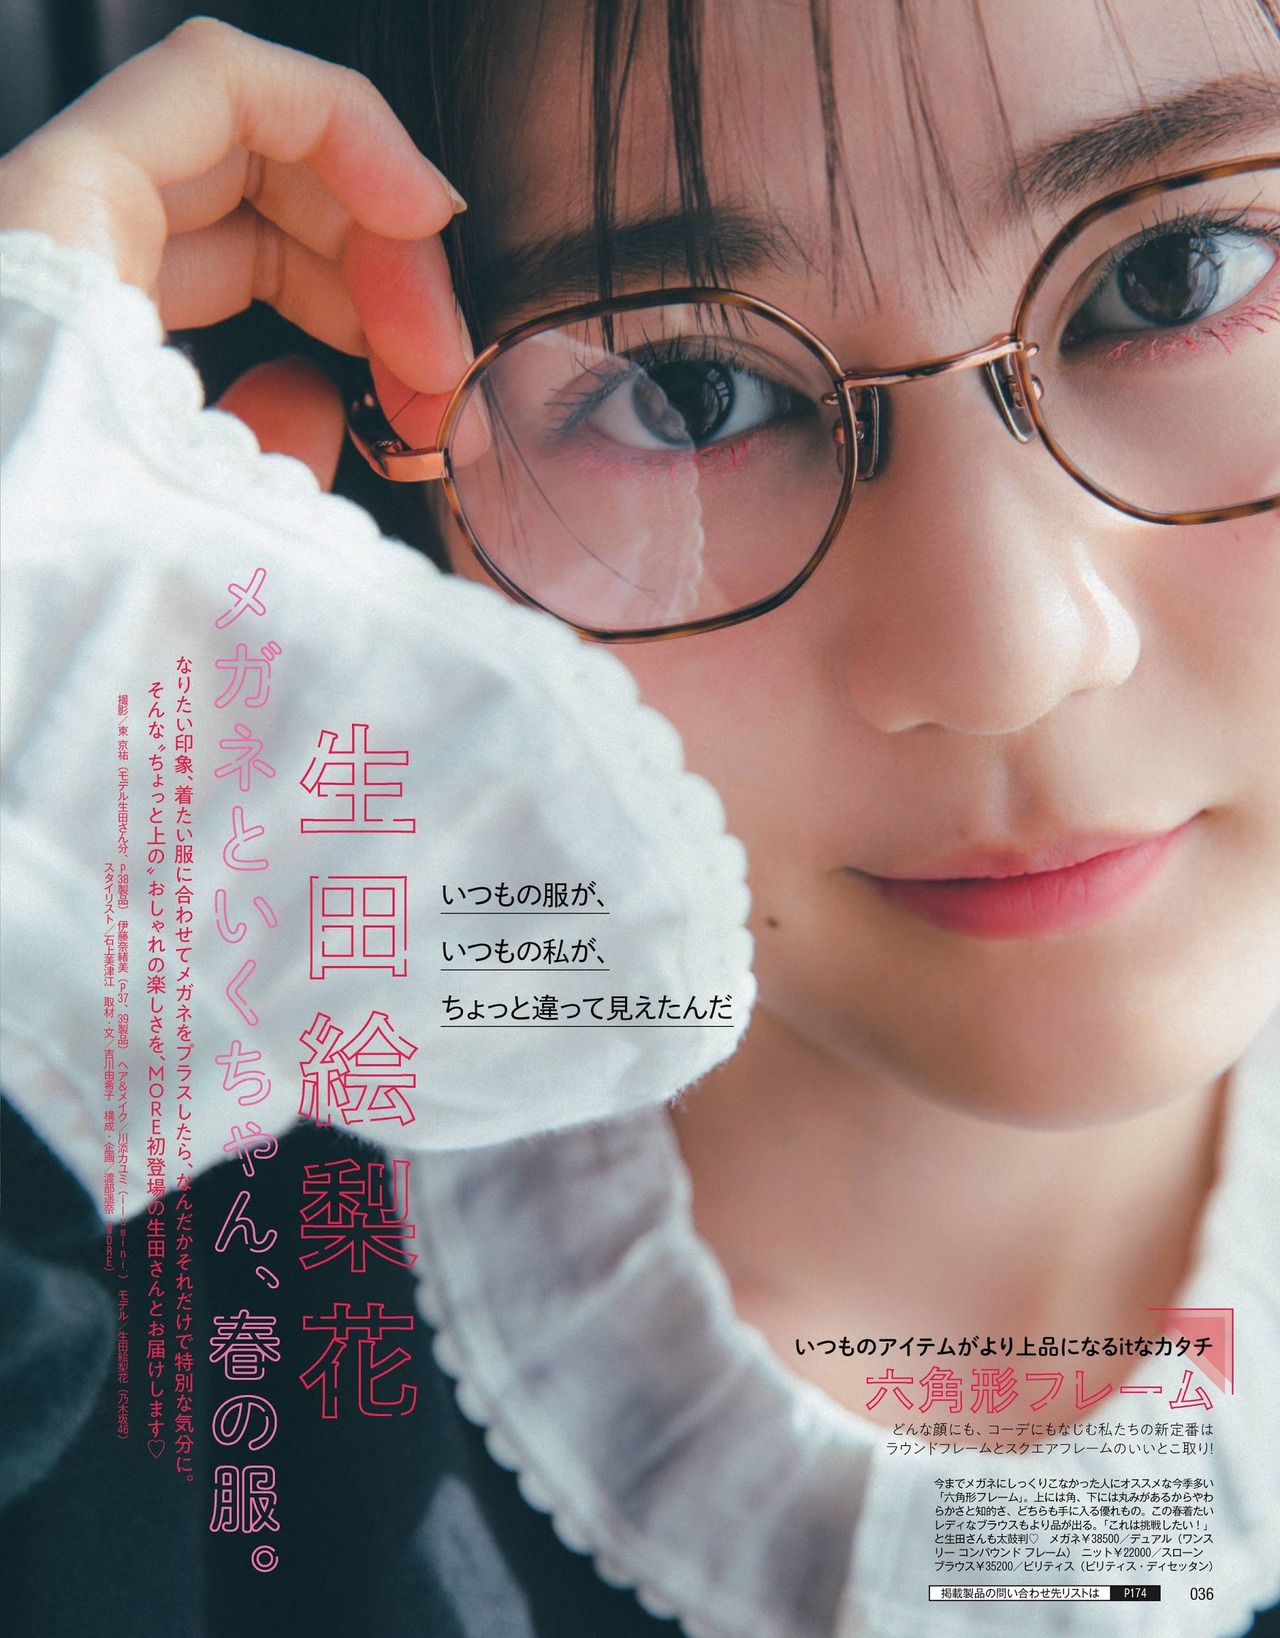 Erika Ikuta 生田絵梨花, More Magazine 2021.05